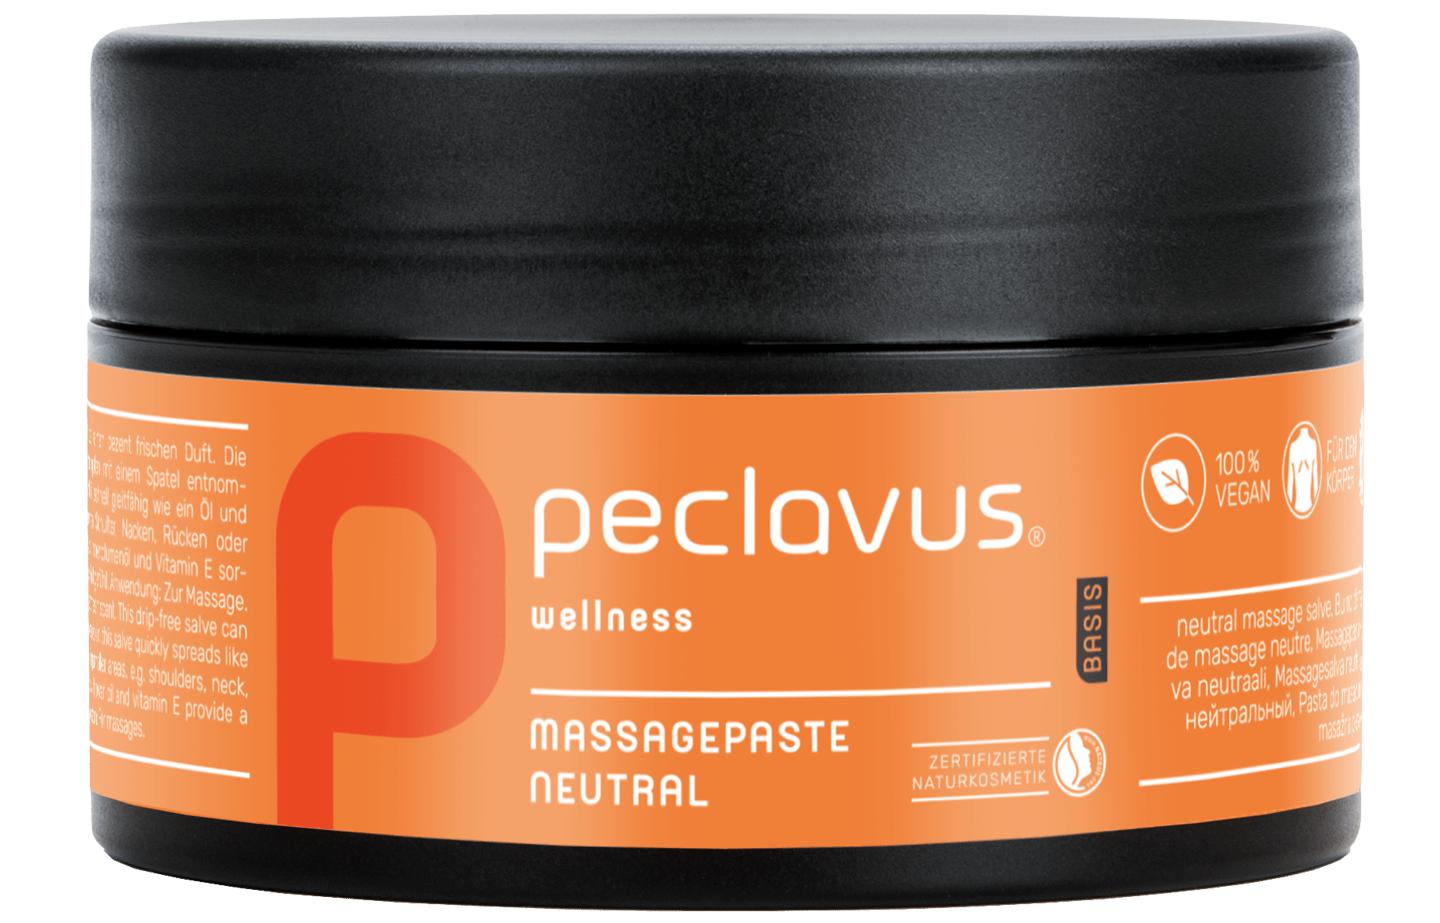 PECLAVUS Massagepaste Neutral 250 ml | Basis